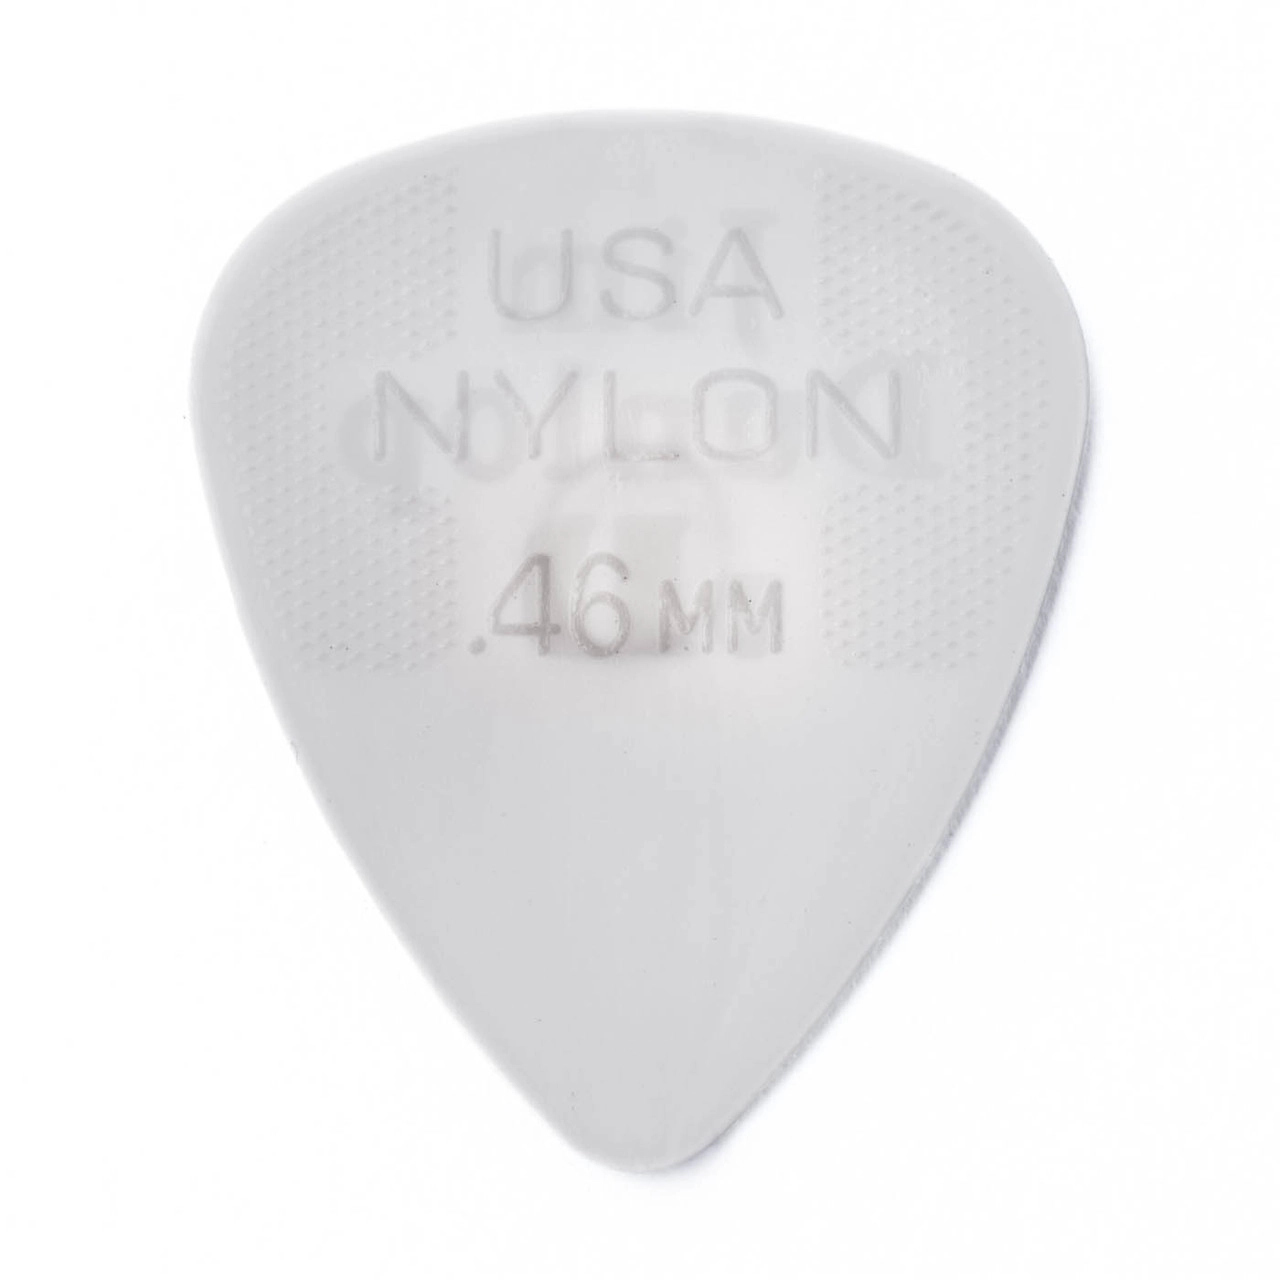 Dunlop Nylon Standard 12xPack Plectrums | Select Gauge